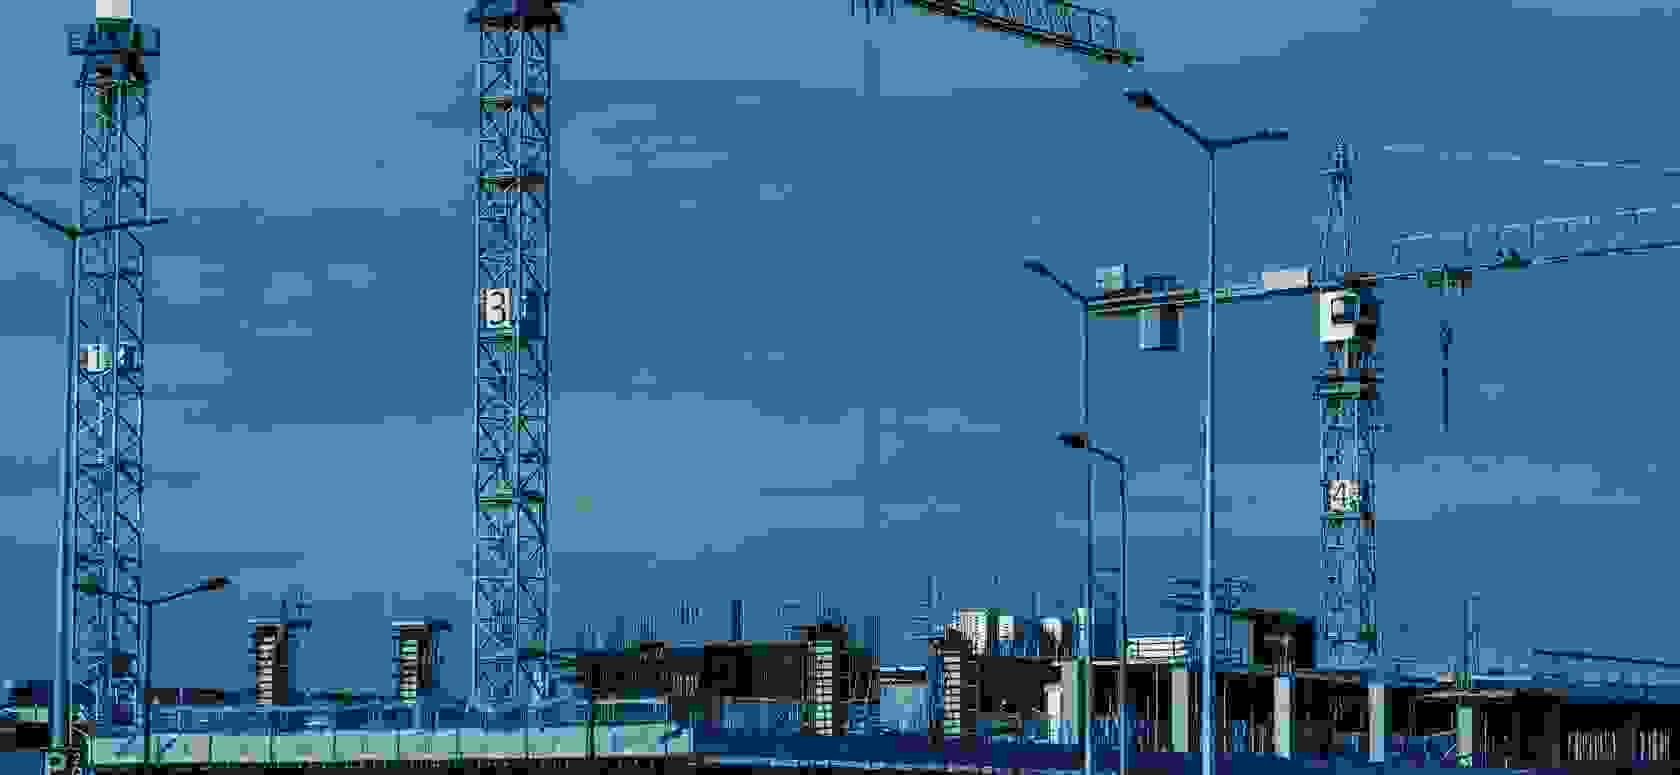  Cranes on blue background